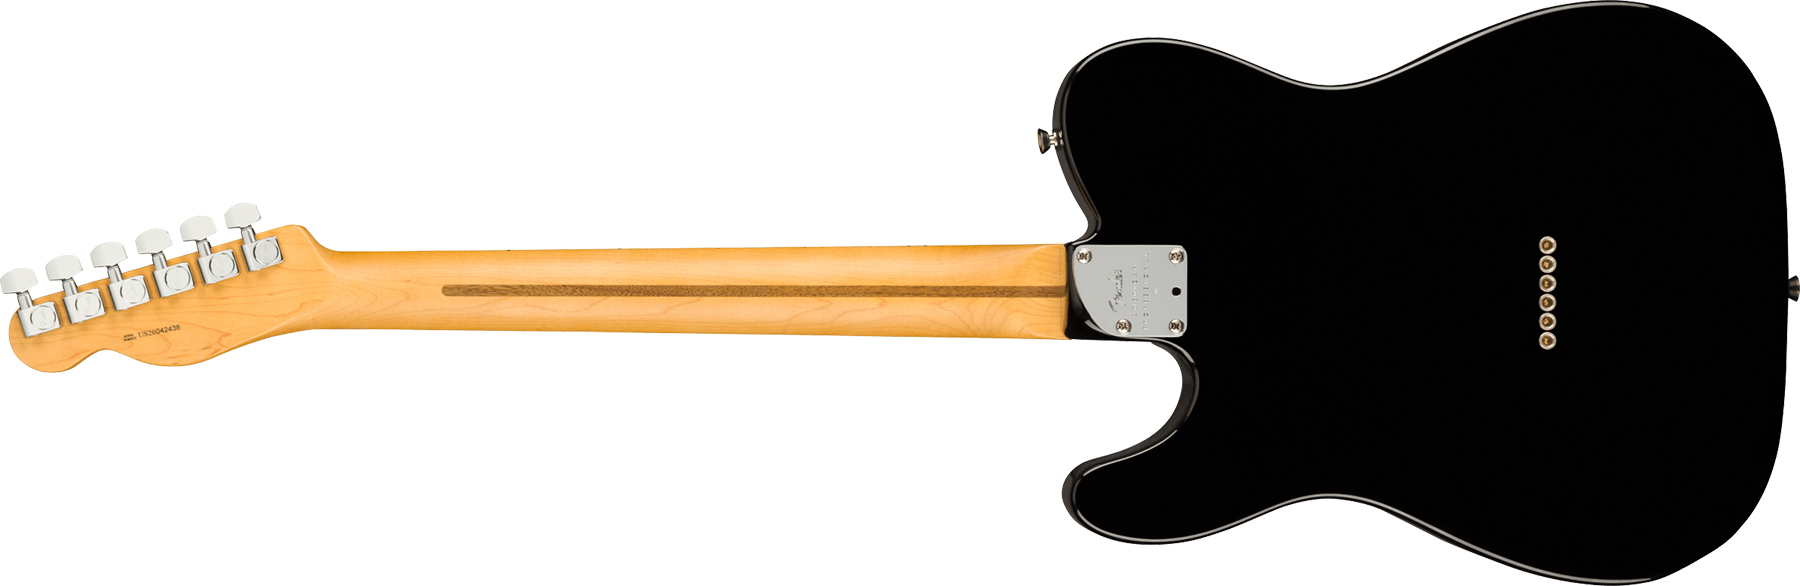 Fender Tele American Professional Ii Usa Mn - Black - E-Gitarre in Teleform - Variation 1